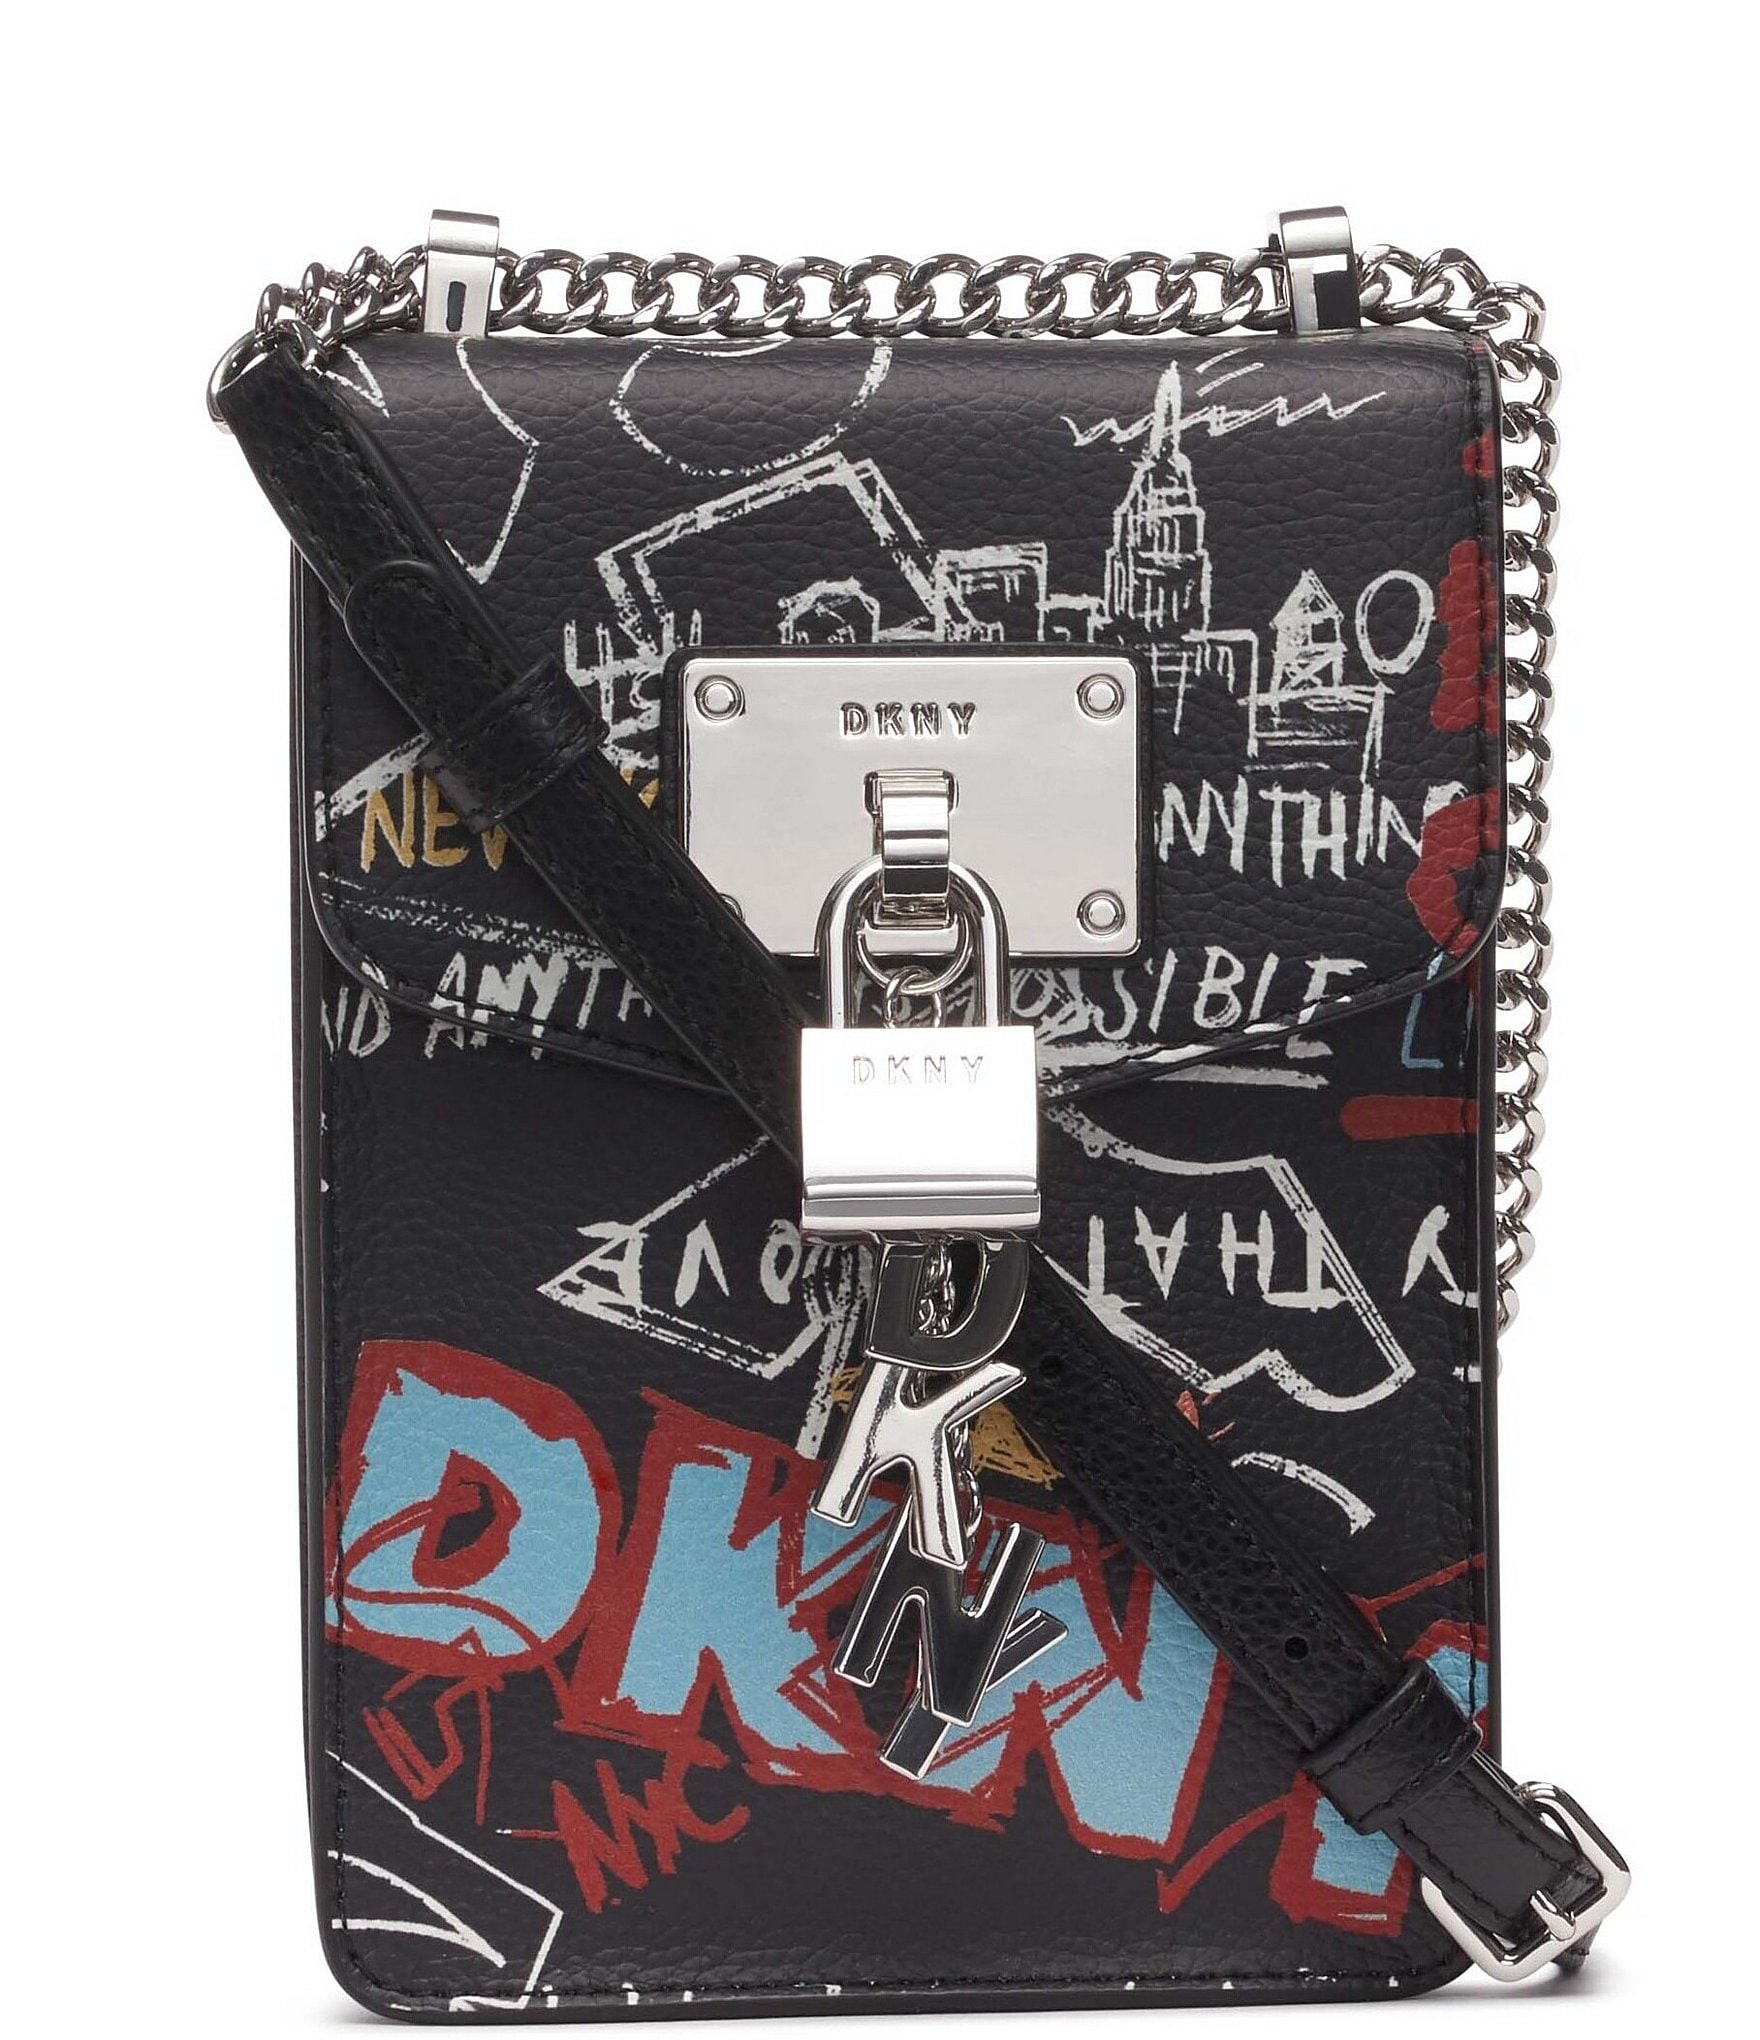 DKNY LOGO Donna Karan New York Duffle Bag Small Gym Bag Black and